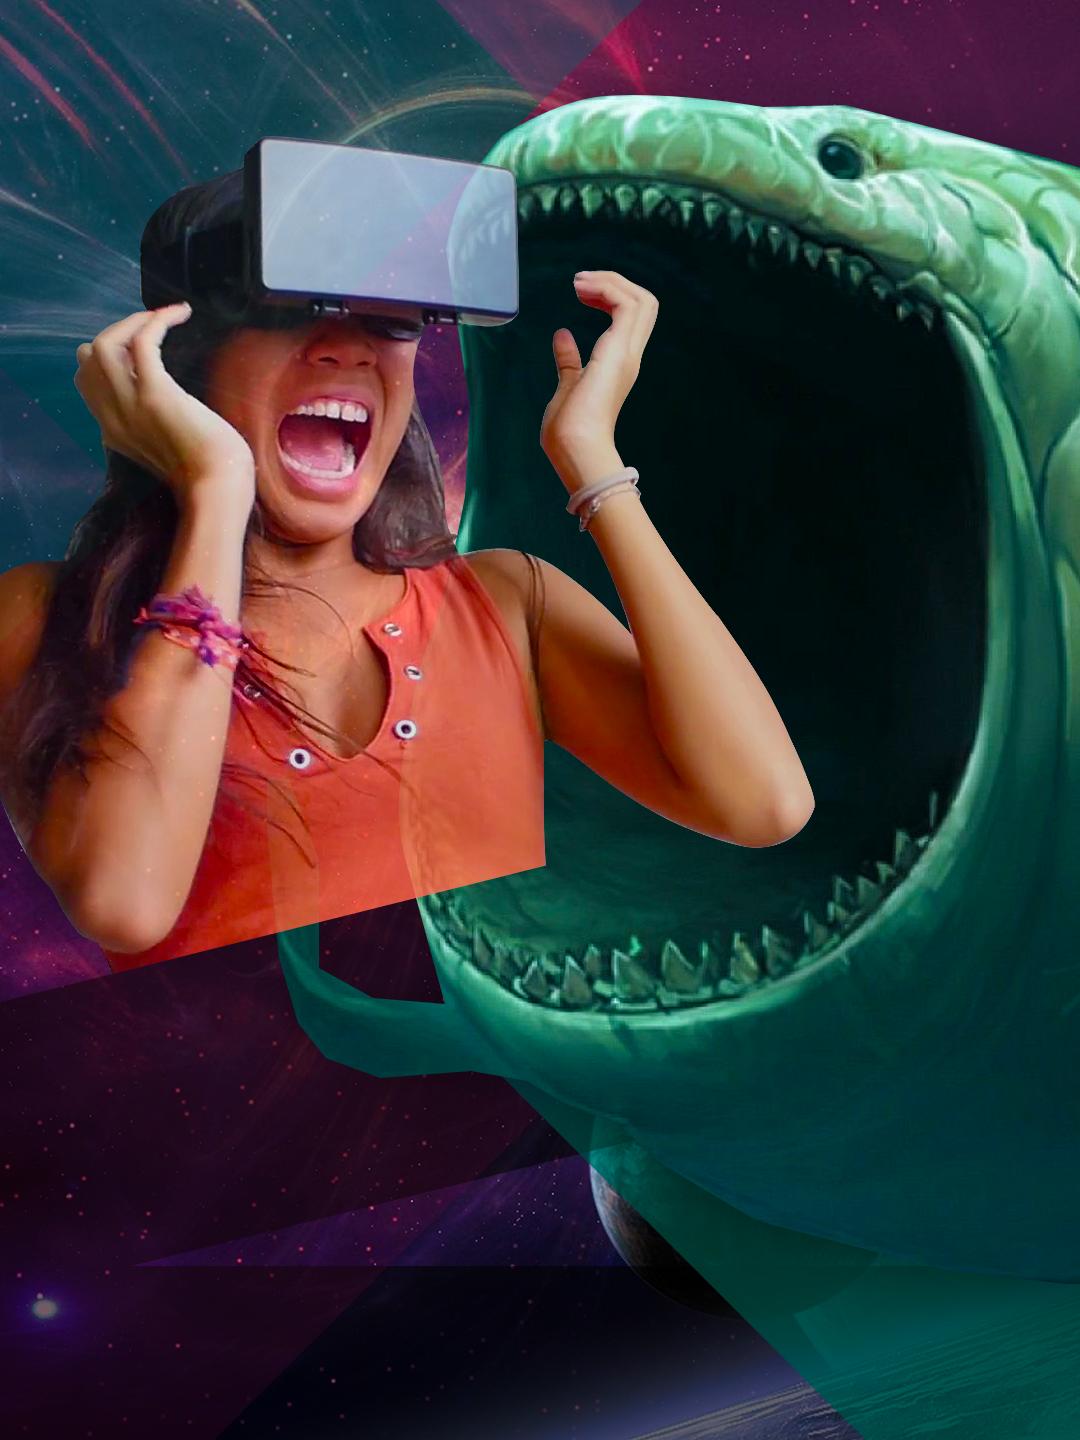 Лучшее видео 360. 360 Virtual reality ролик. VR видео. Видео 360 градусов. Формат видео VR.